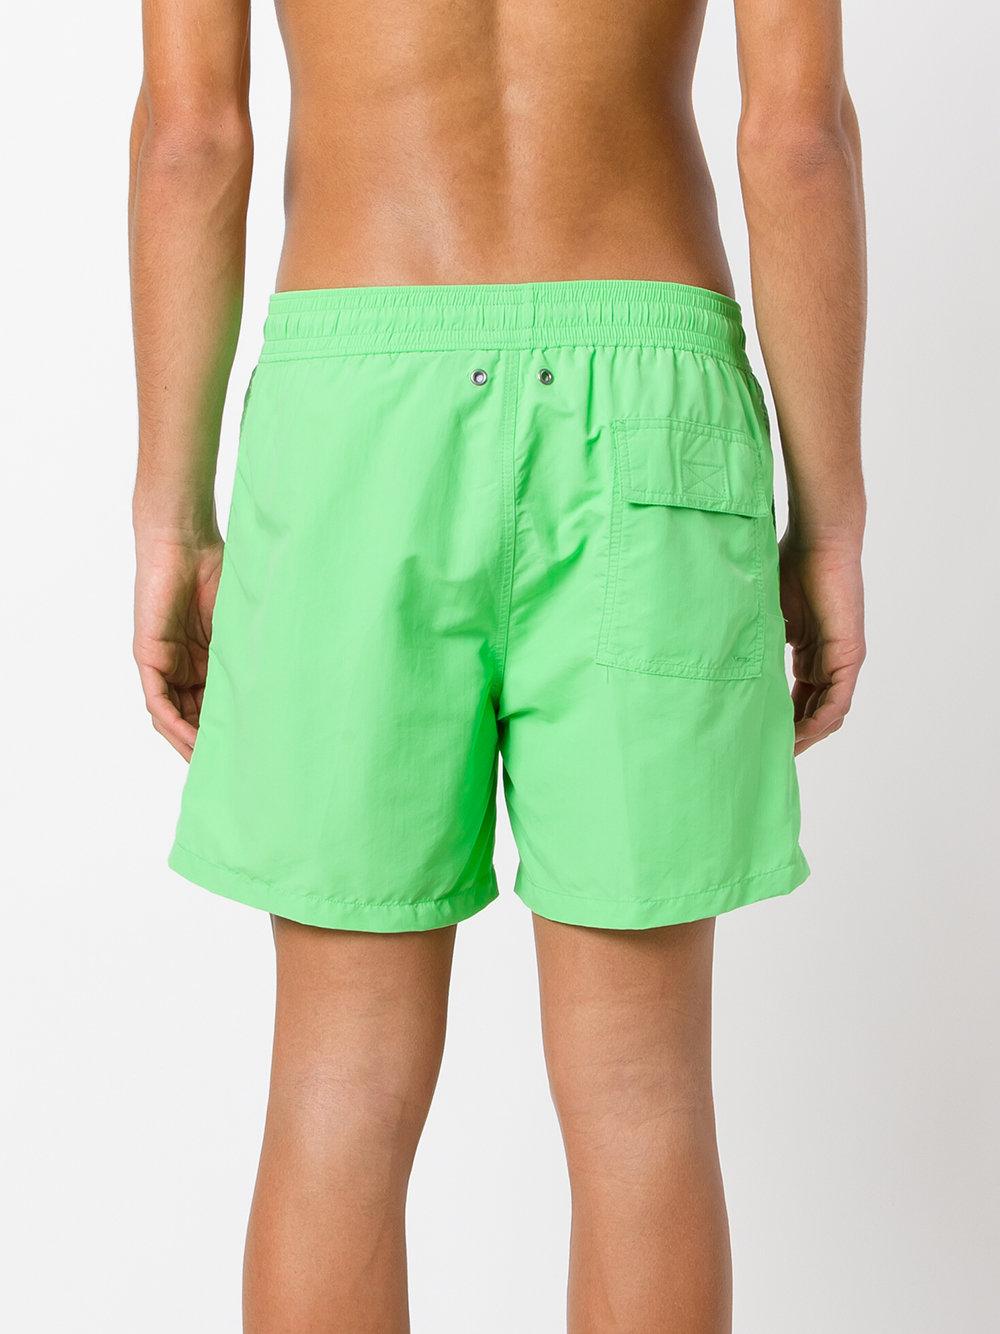 Polo Ralph Lauren Swim Shorts in Green for Men - Lyst